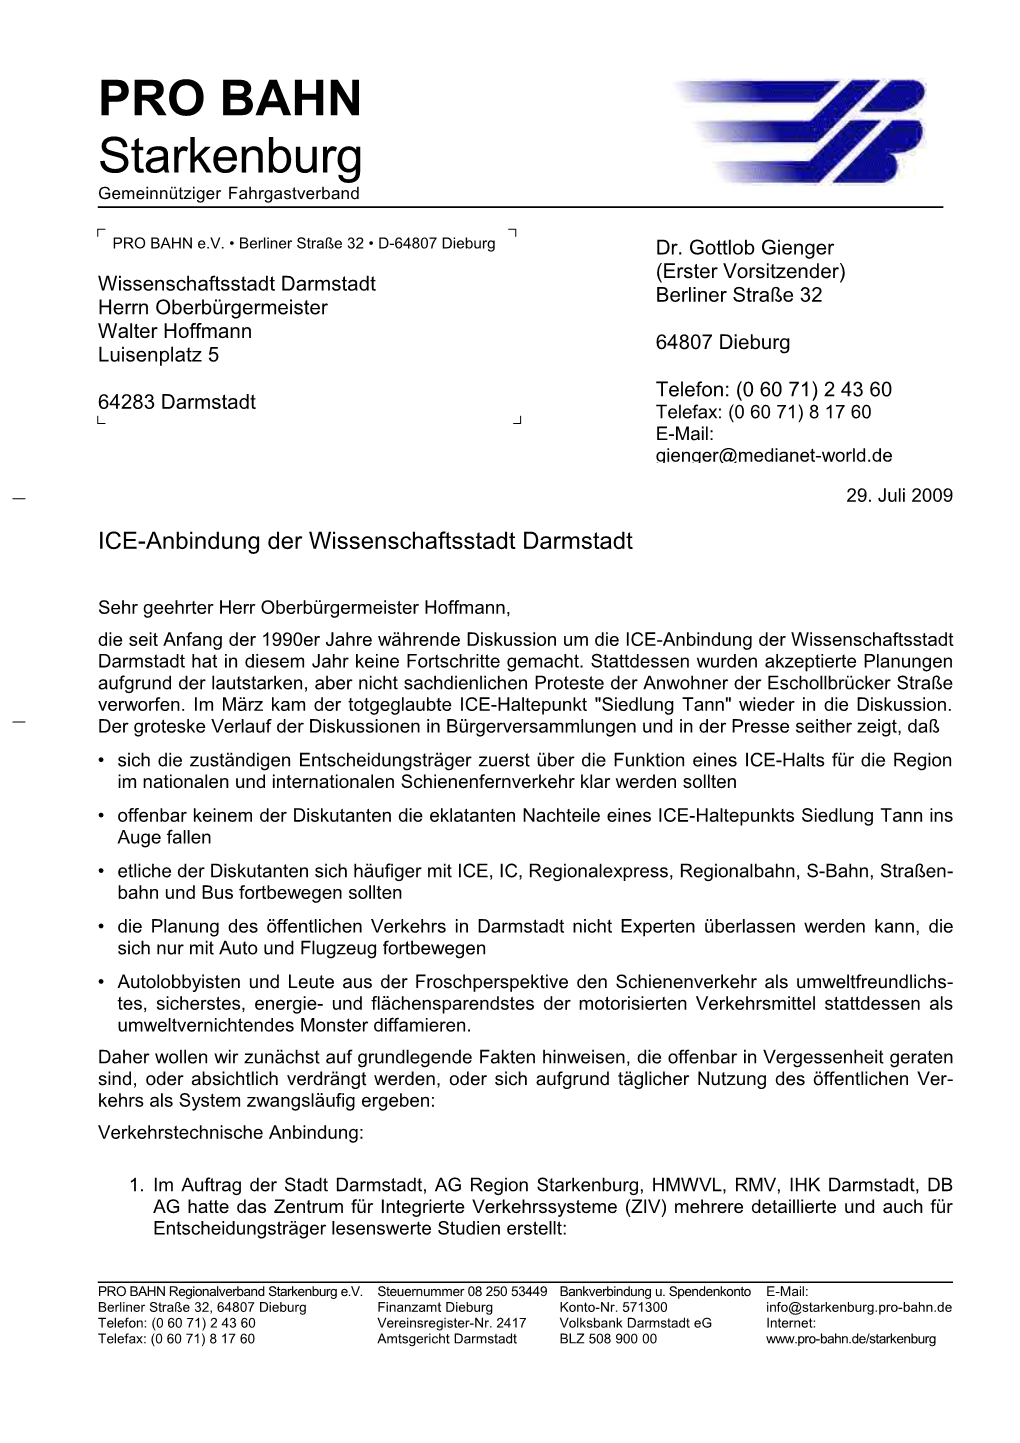 ICE-Anbindung Wissenschaftsstadt Darmstadt